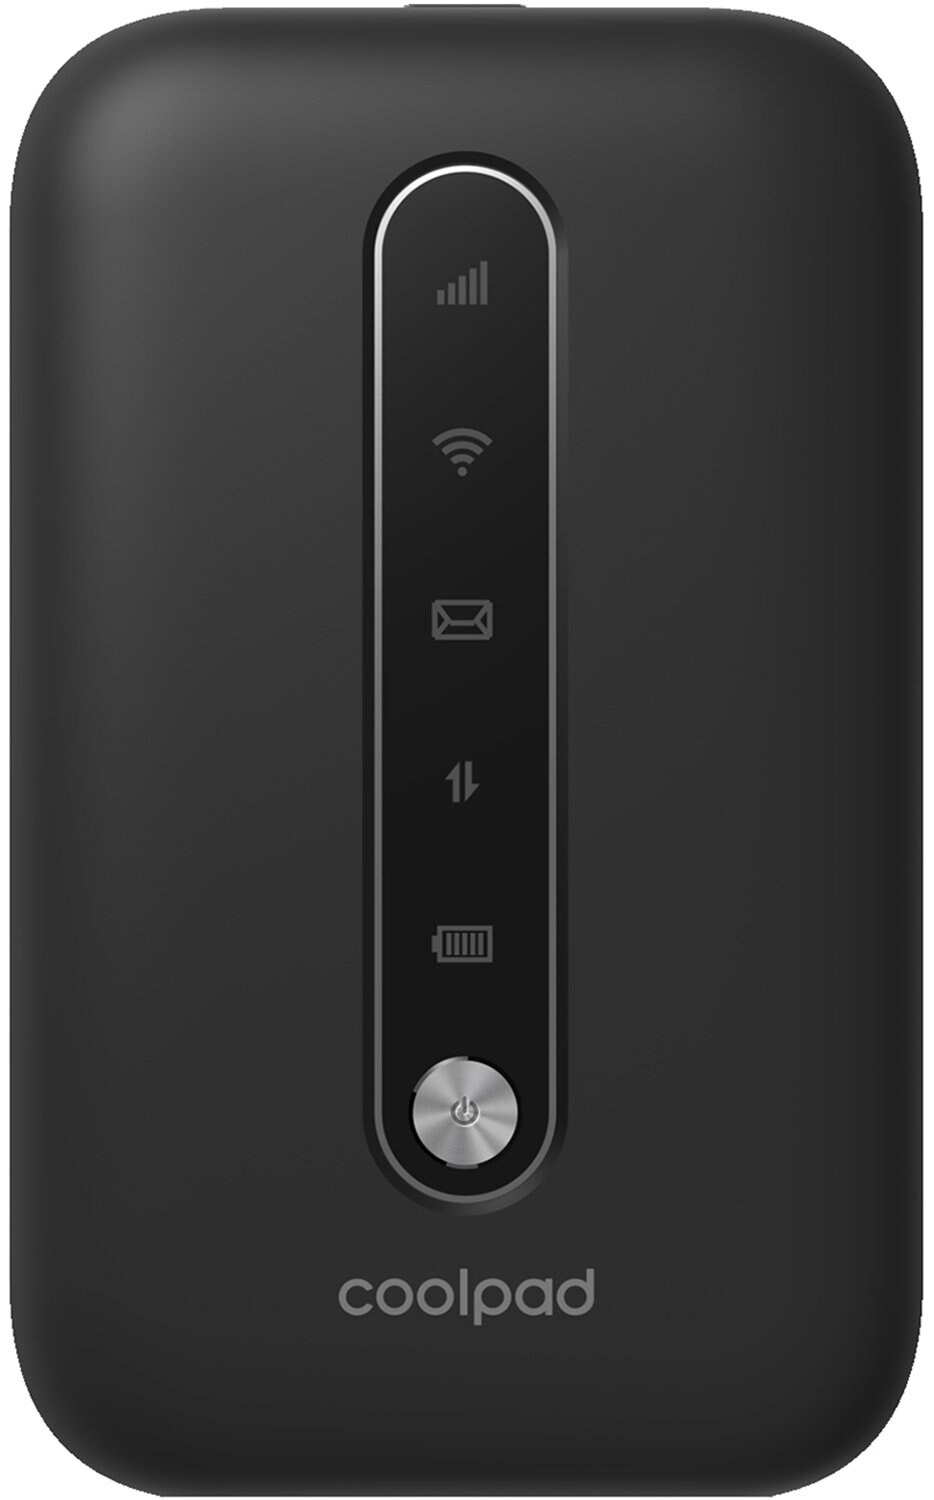 T-Mobile Coolpad SURF MDM 9207 Single-Core Hotspot Device Kit - Black